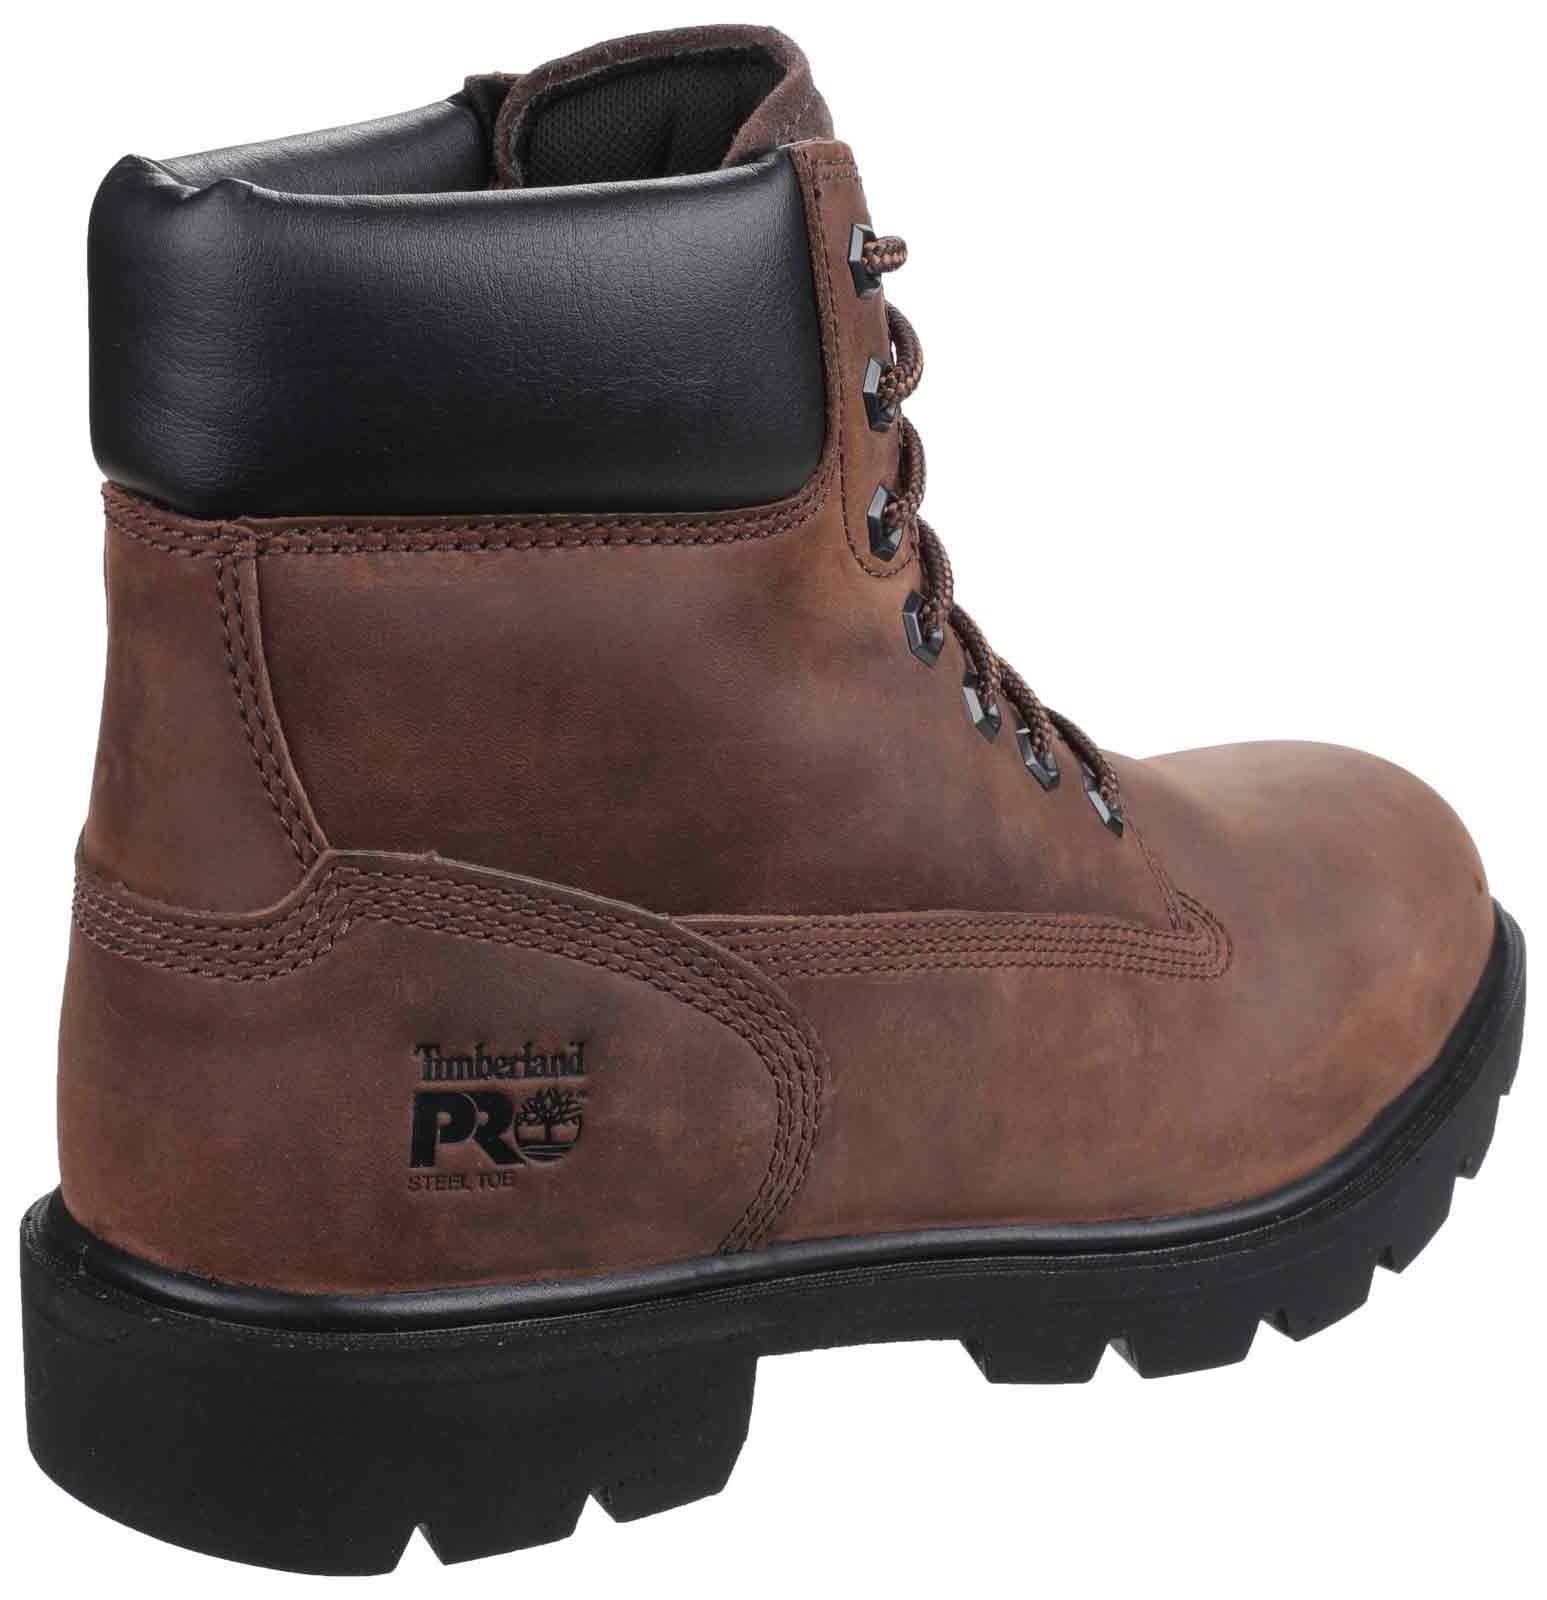 Timberland Pro Workwear Sawhorse Lace up Safety Boot - Standard Safety Boots  - Mens Safety Boots & Shoes - Safety Footwear - Best Workwear